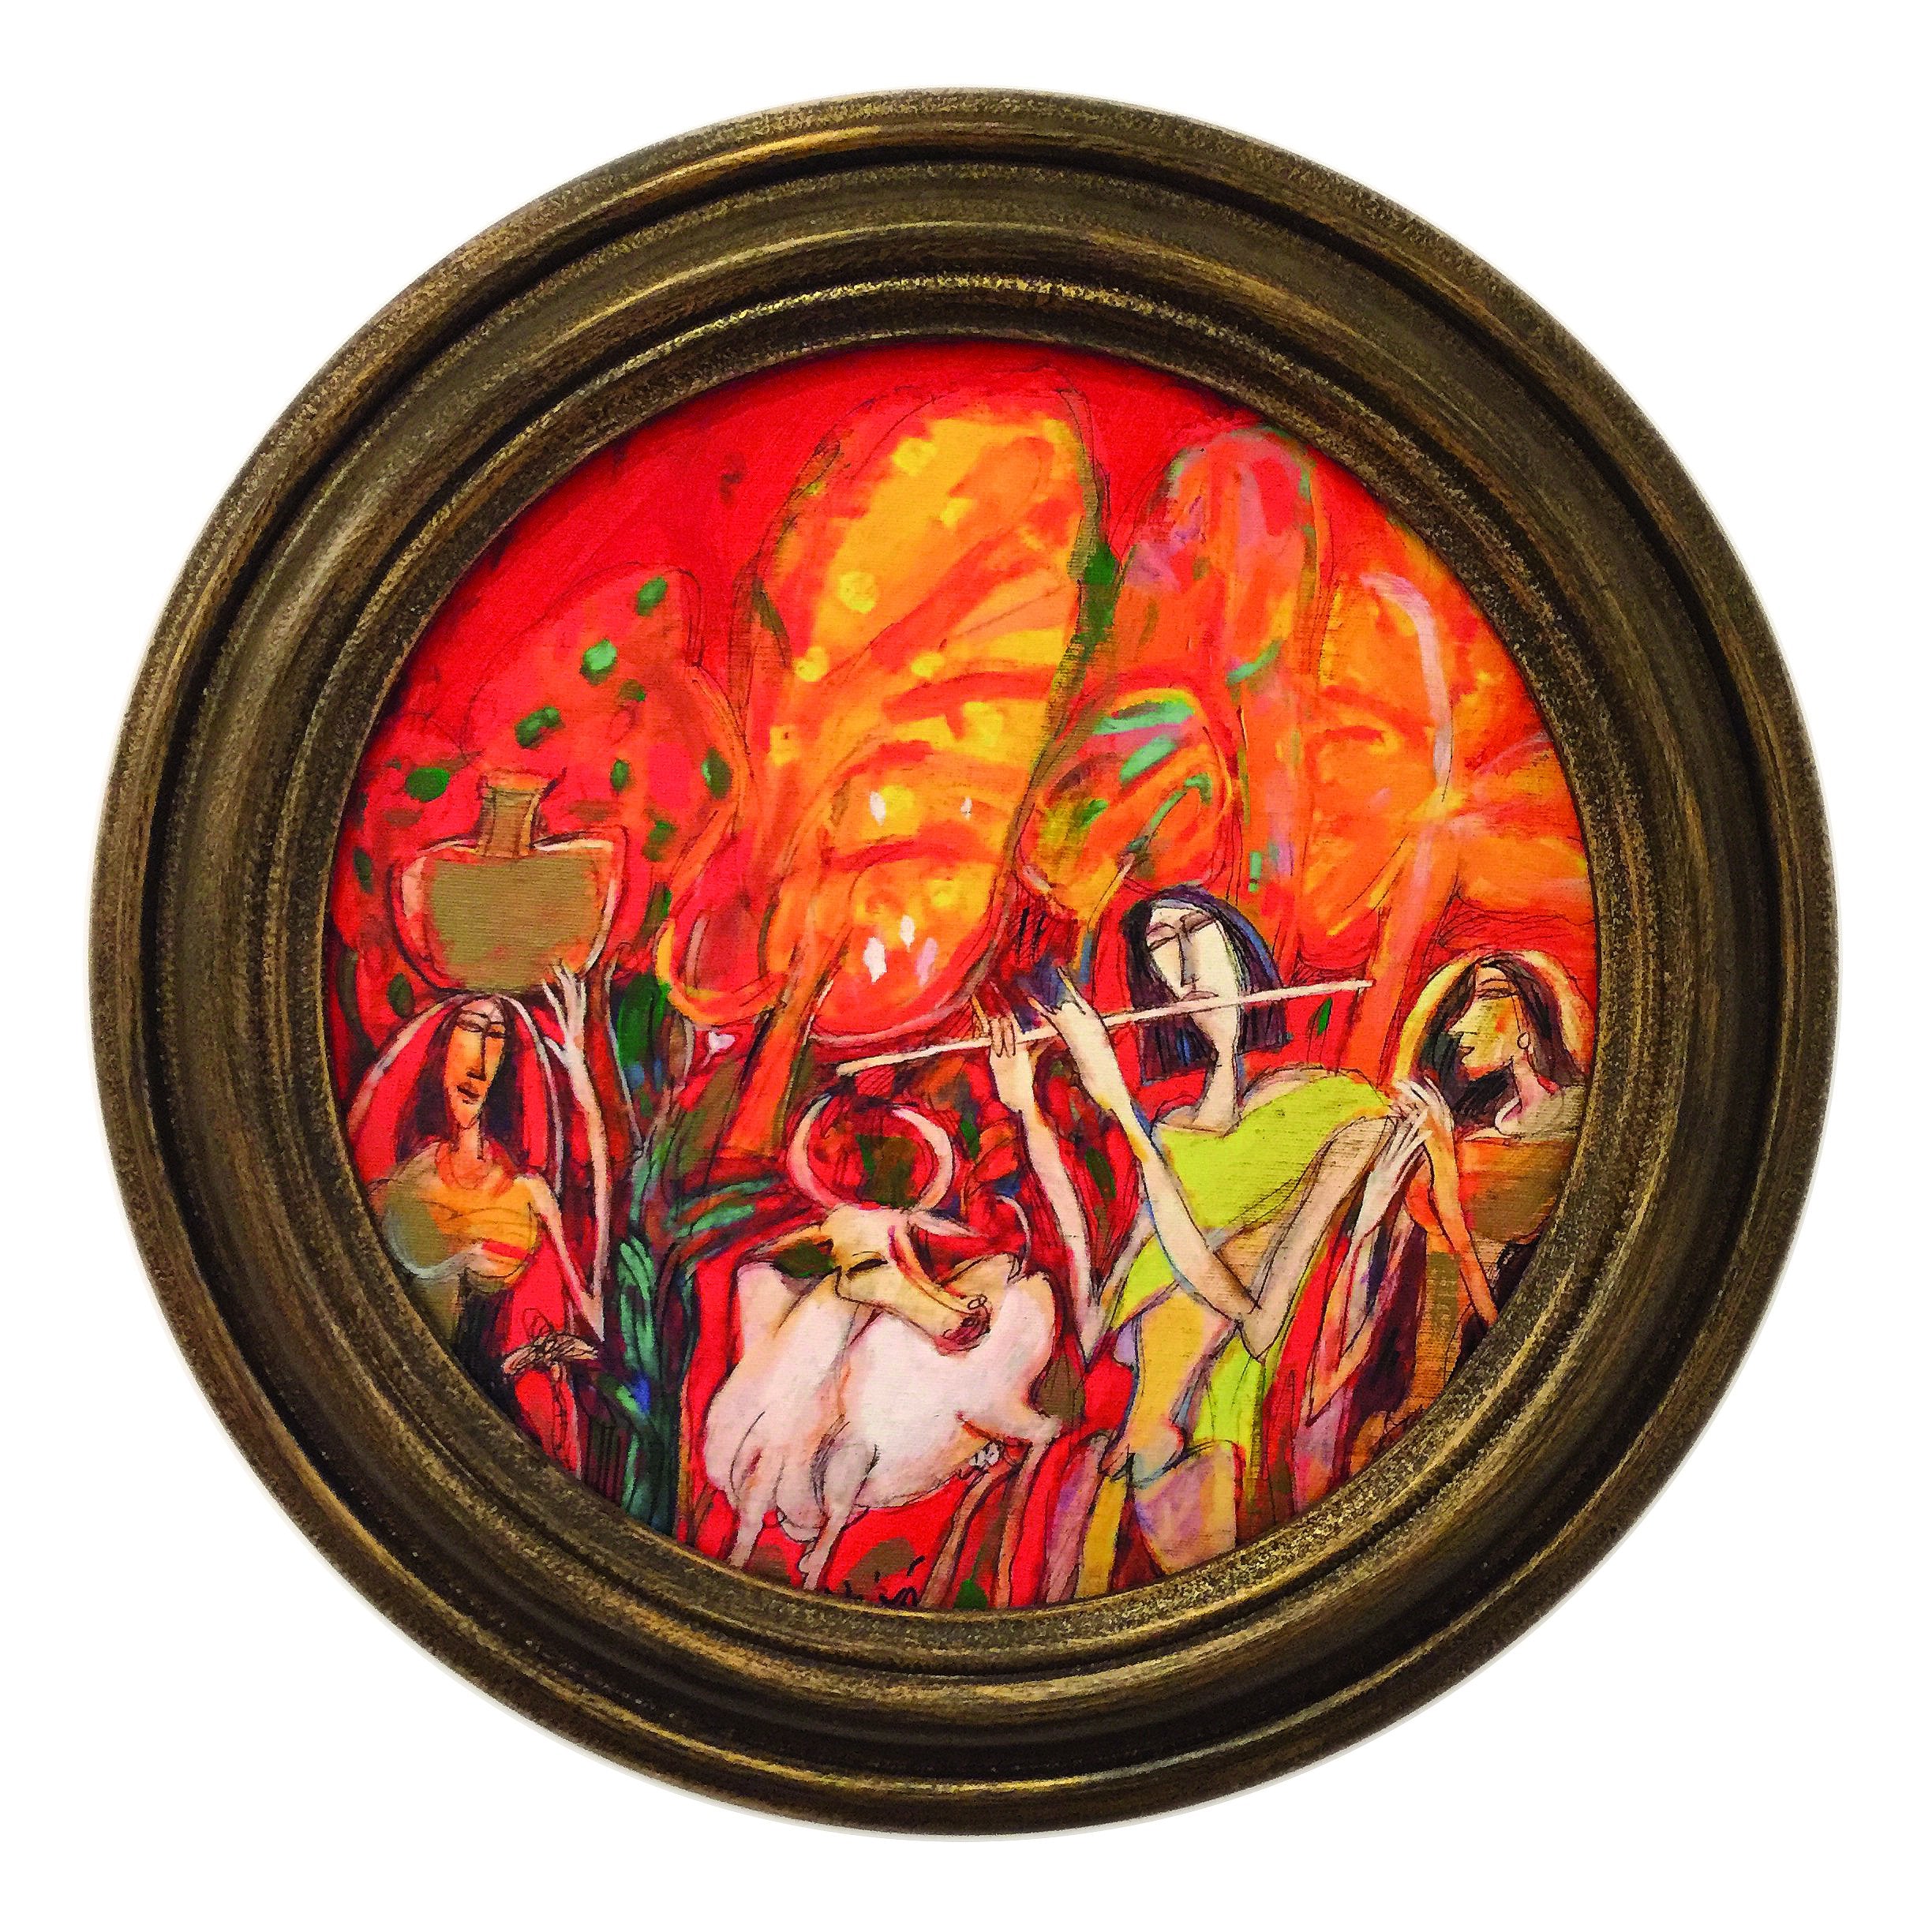 Mirror of life|Dhiraj Choudhury- Acrylic on canvas, 2015, 18 x 18 inches